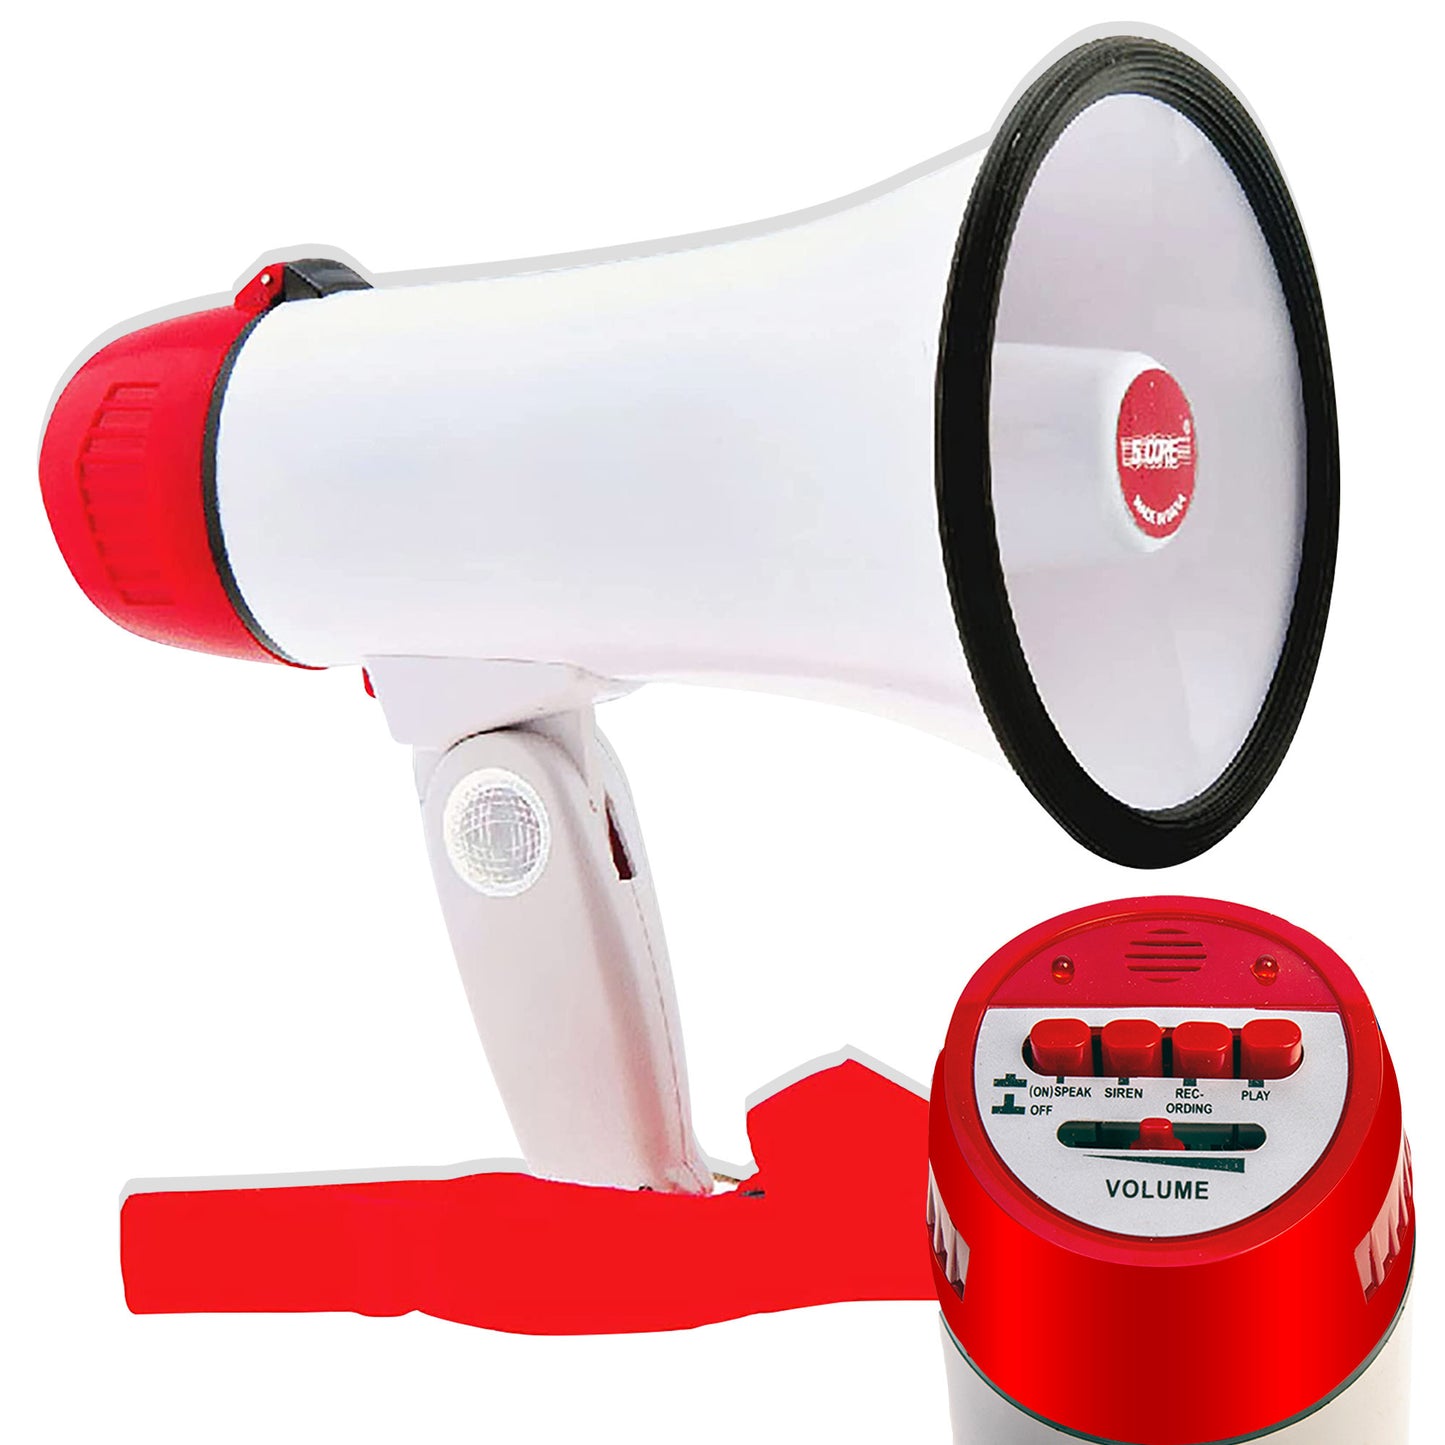 Megaphone Speakers Blow Horn Pro Loud Speaker Bullhorn Handheld Siren Voice Recording 6R